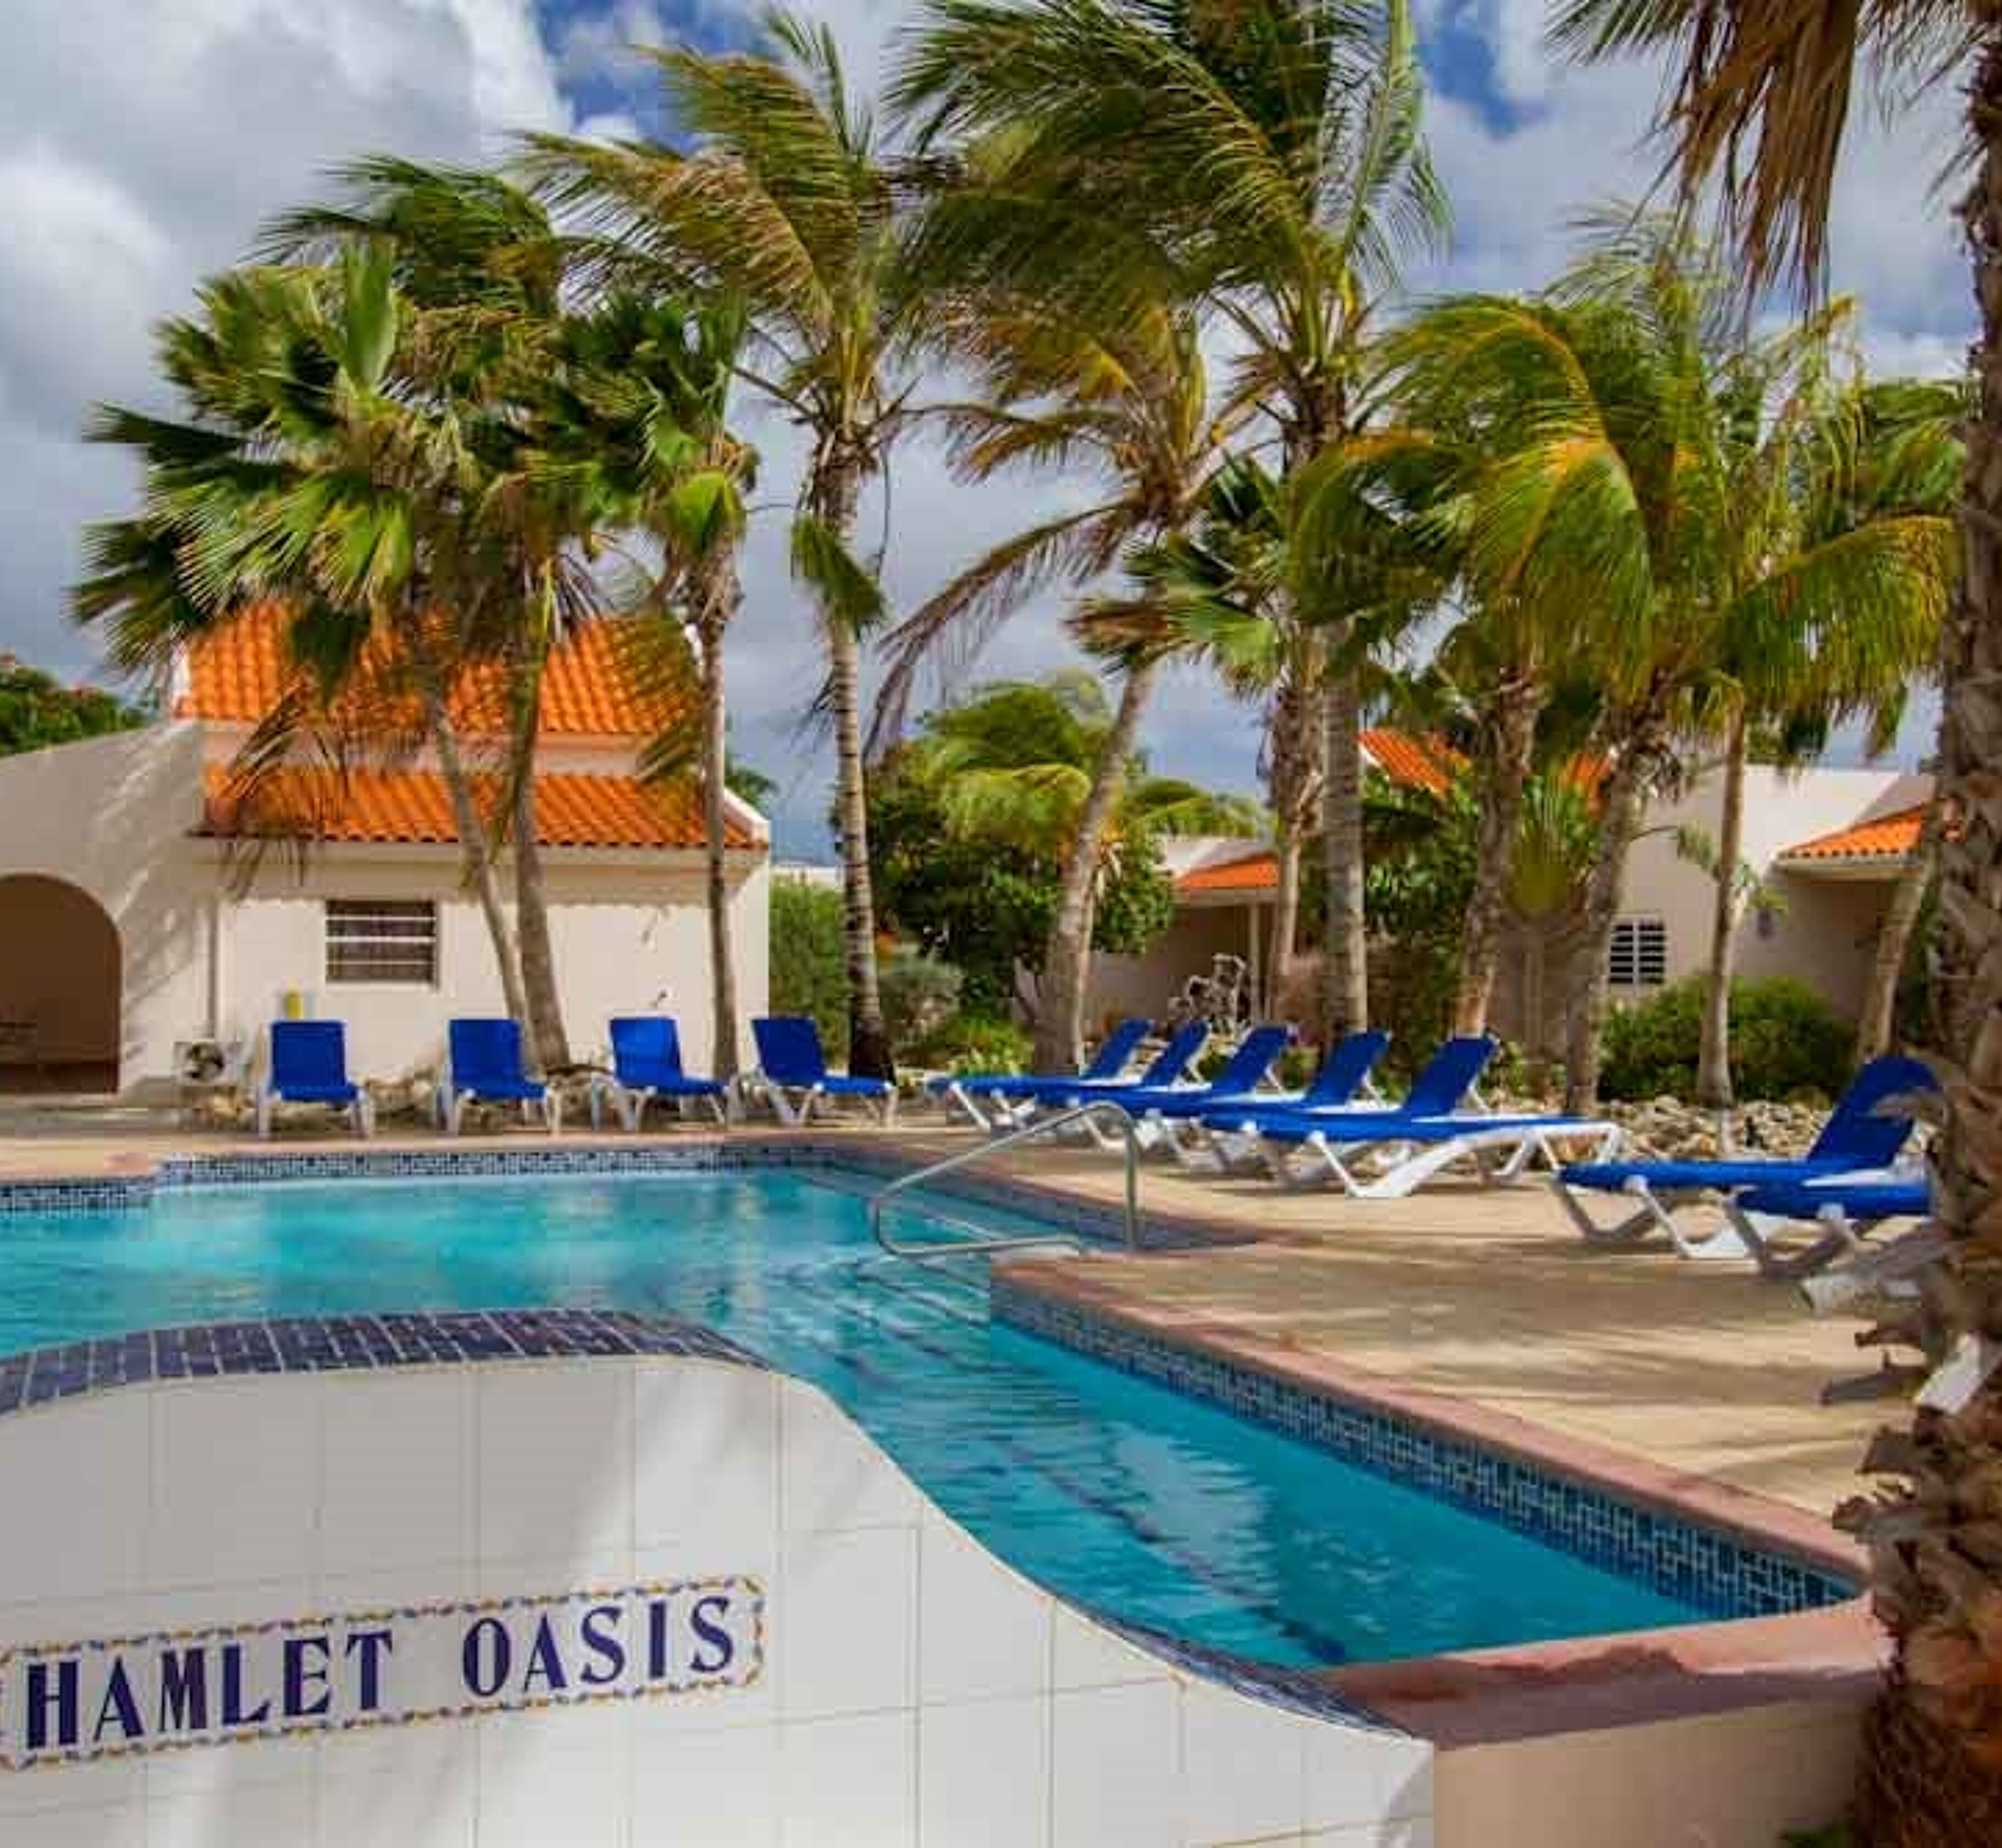 Hamlet Oasis Bonaire